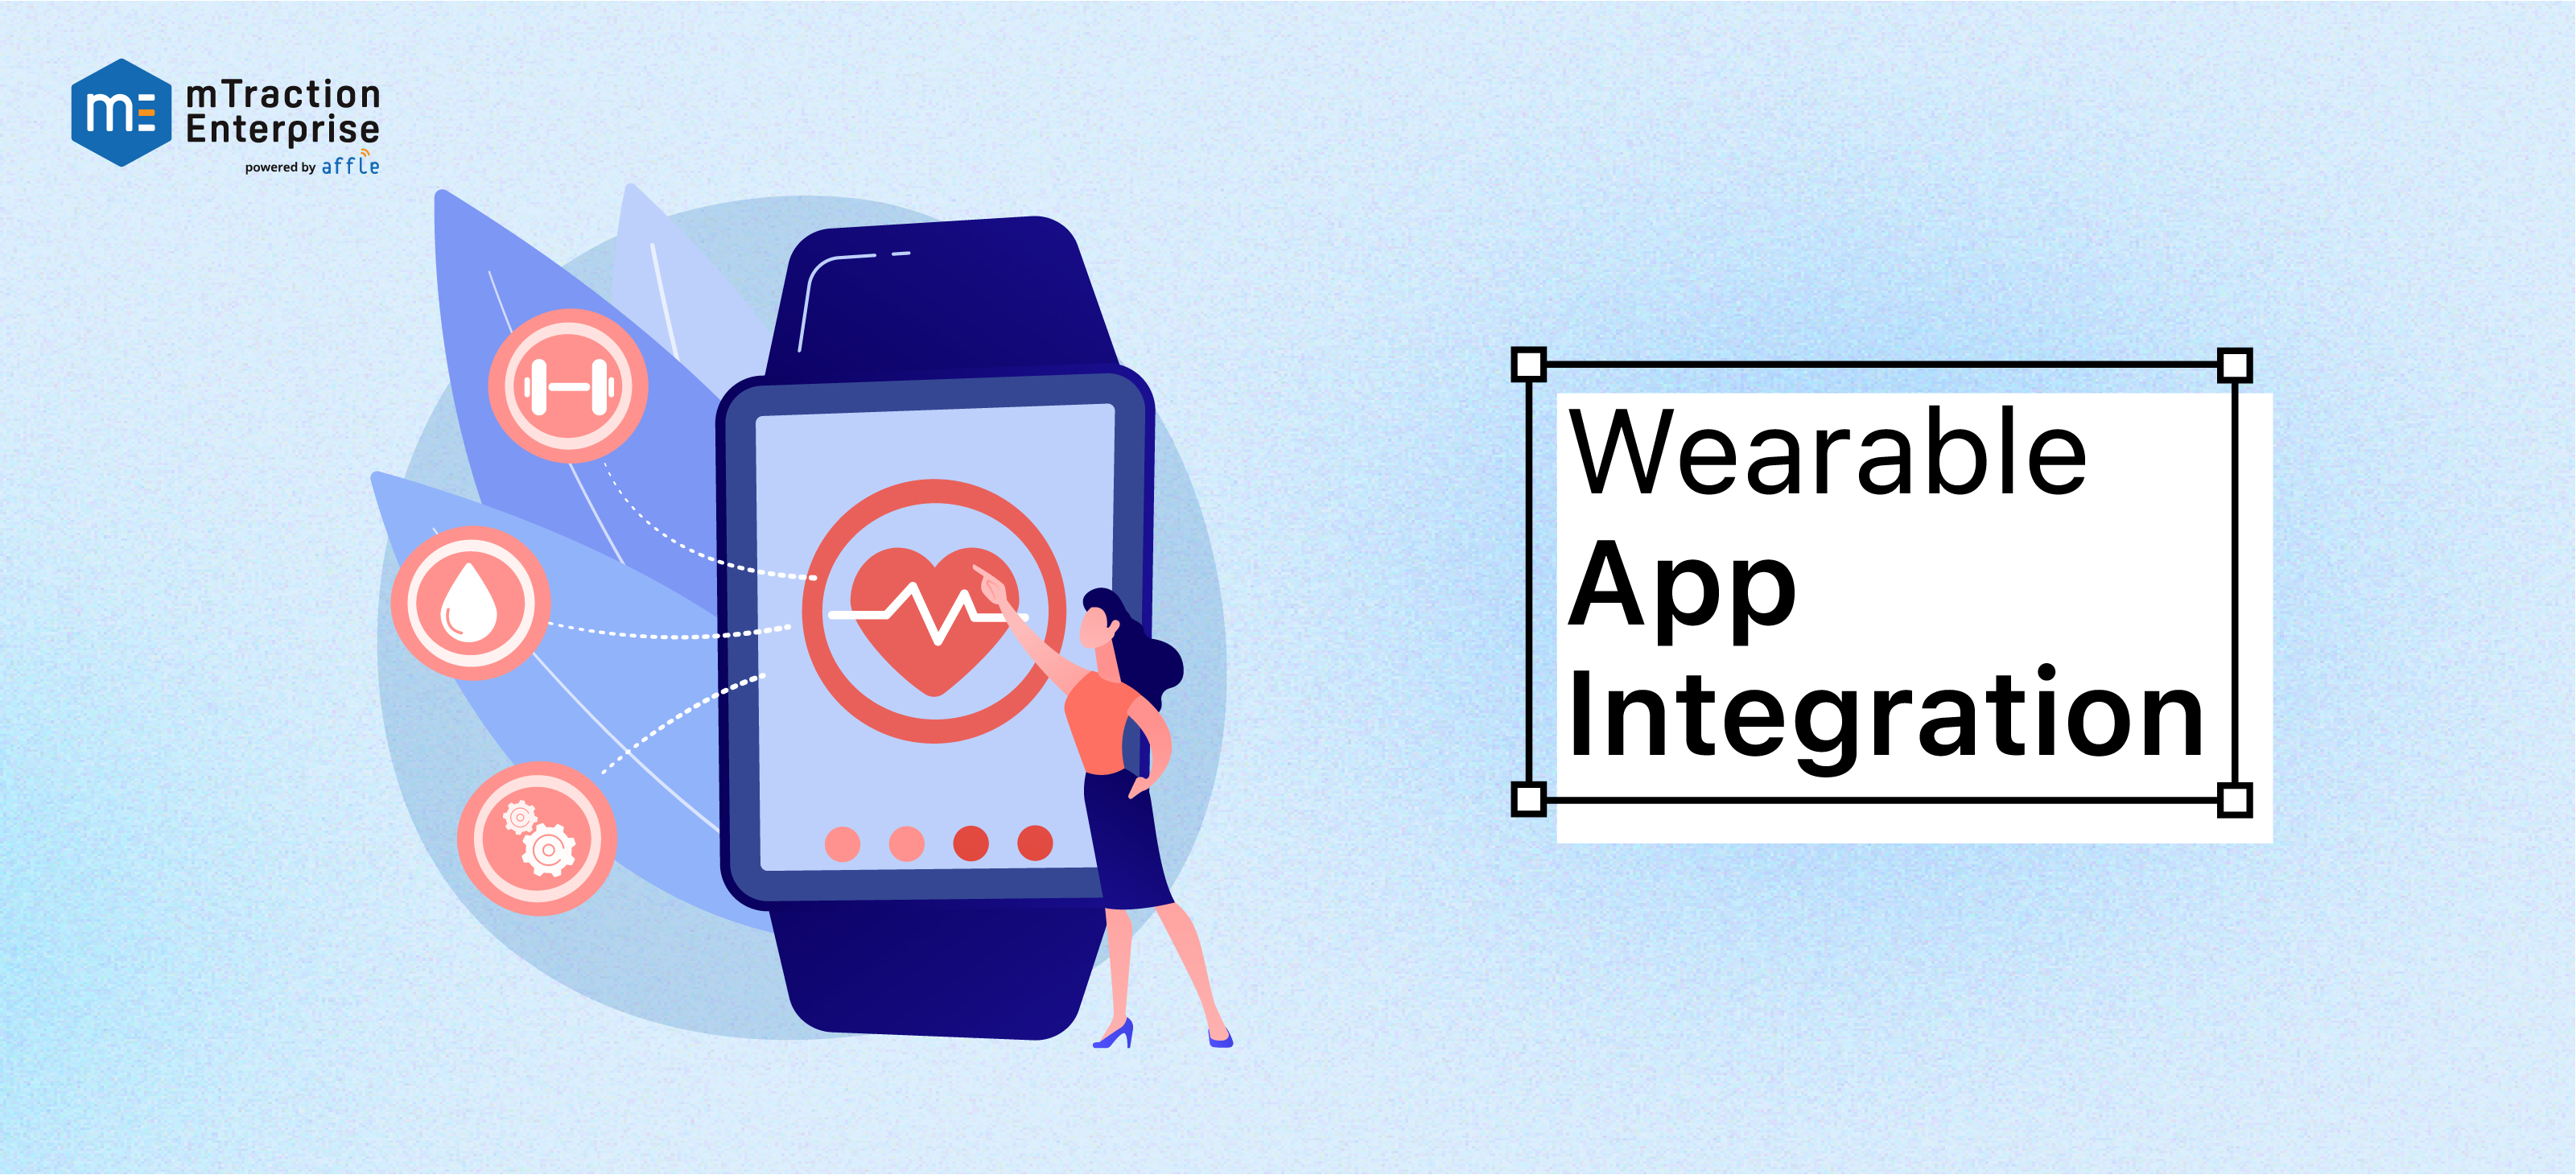 wearable app integration in healthcare mobile app development